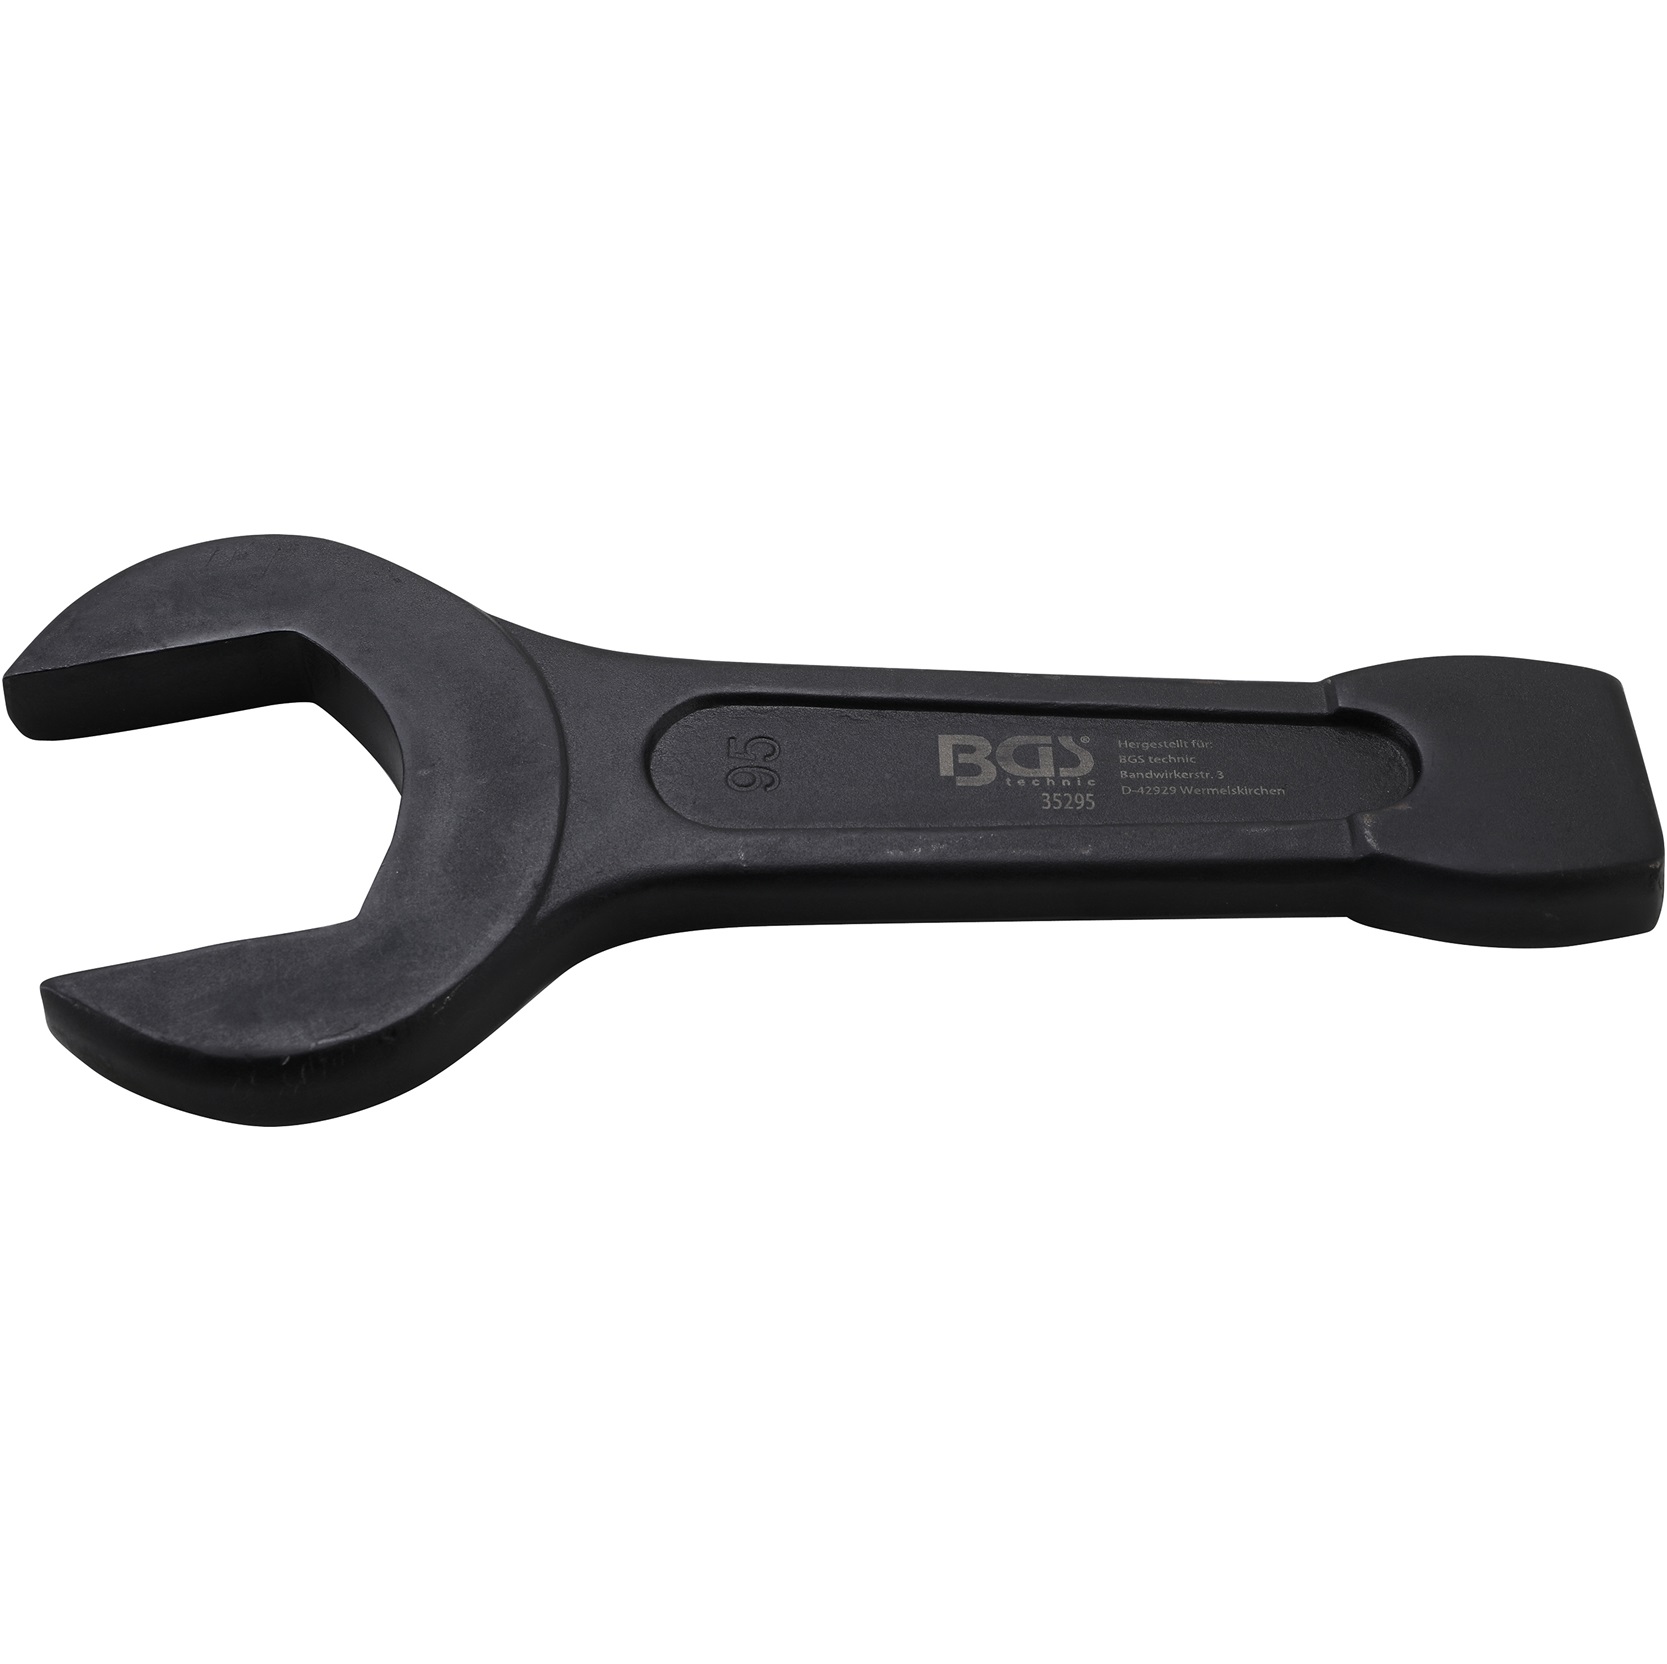 Kľúč plochý vidlicový, úderový, 95 mm, BGS 35295